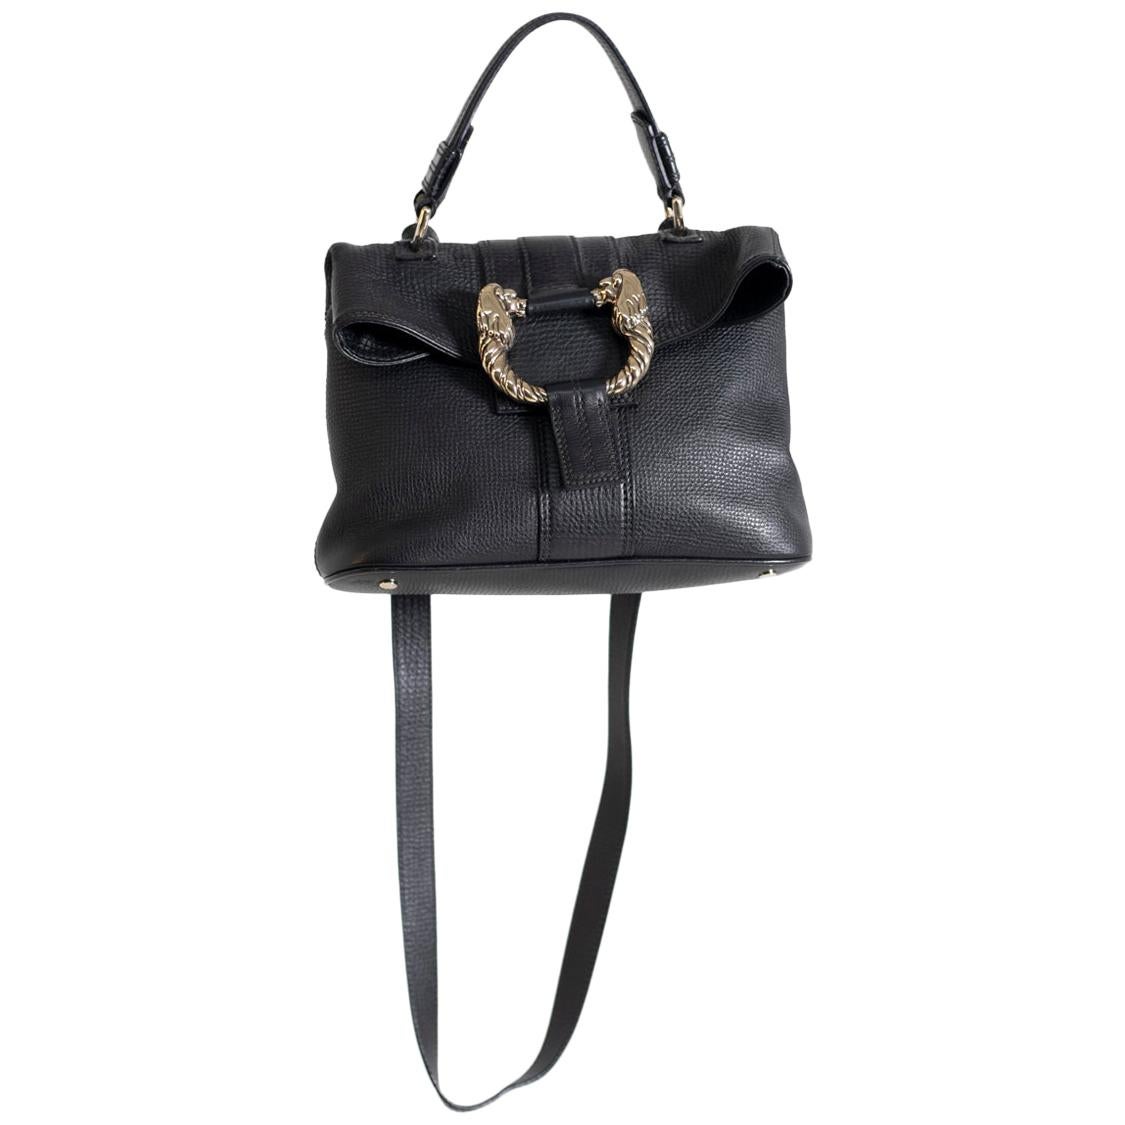 Bulgari Handbag Convertible Shoulder Strap Leather with Jewel in Worked Metal